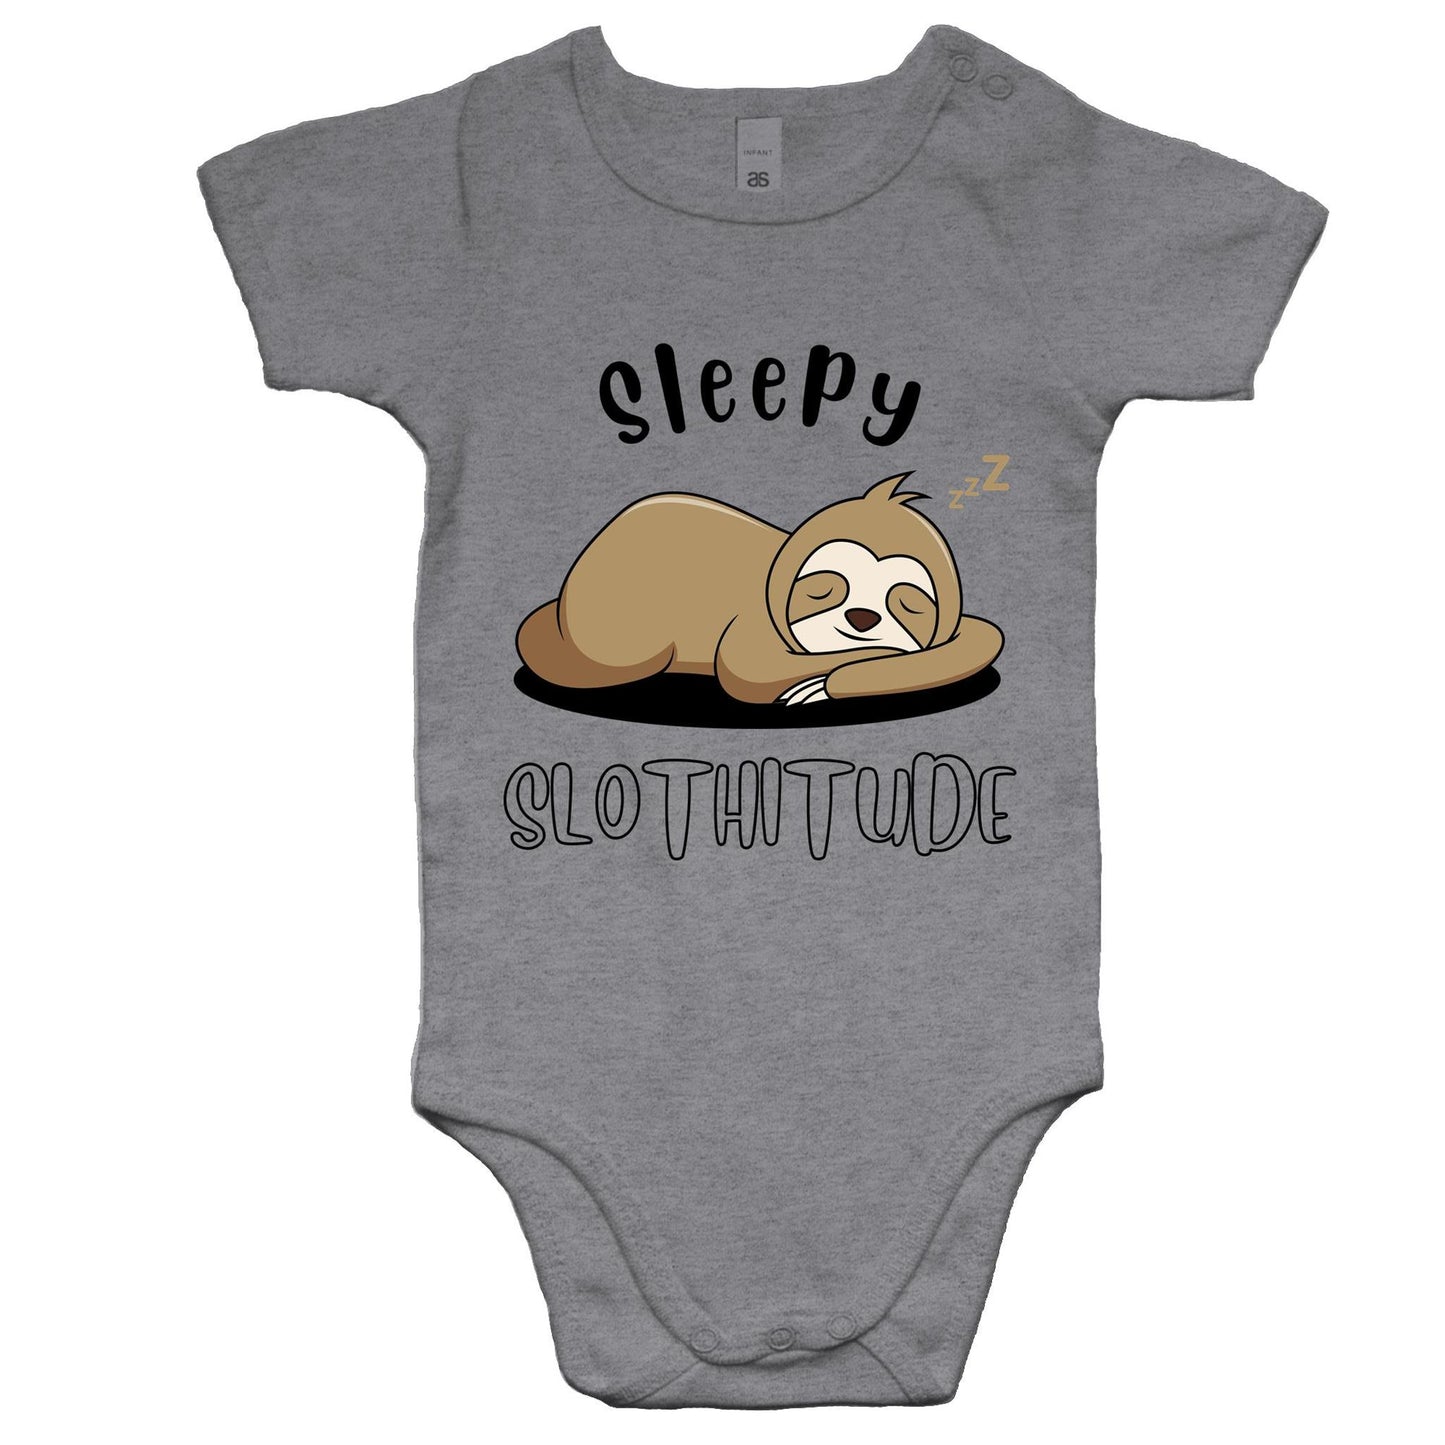 Sleepy Slothitude - Baby Bodysuit Grey Marle Baby Bodysuit animal